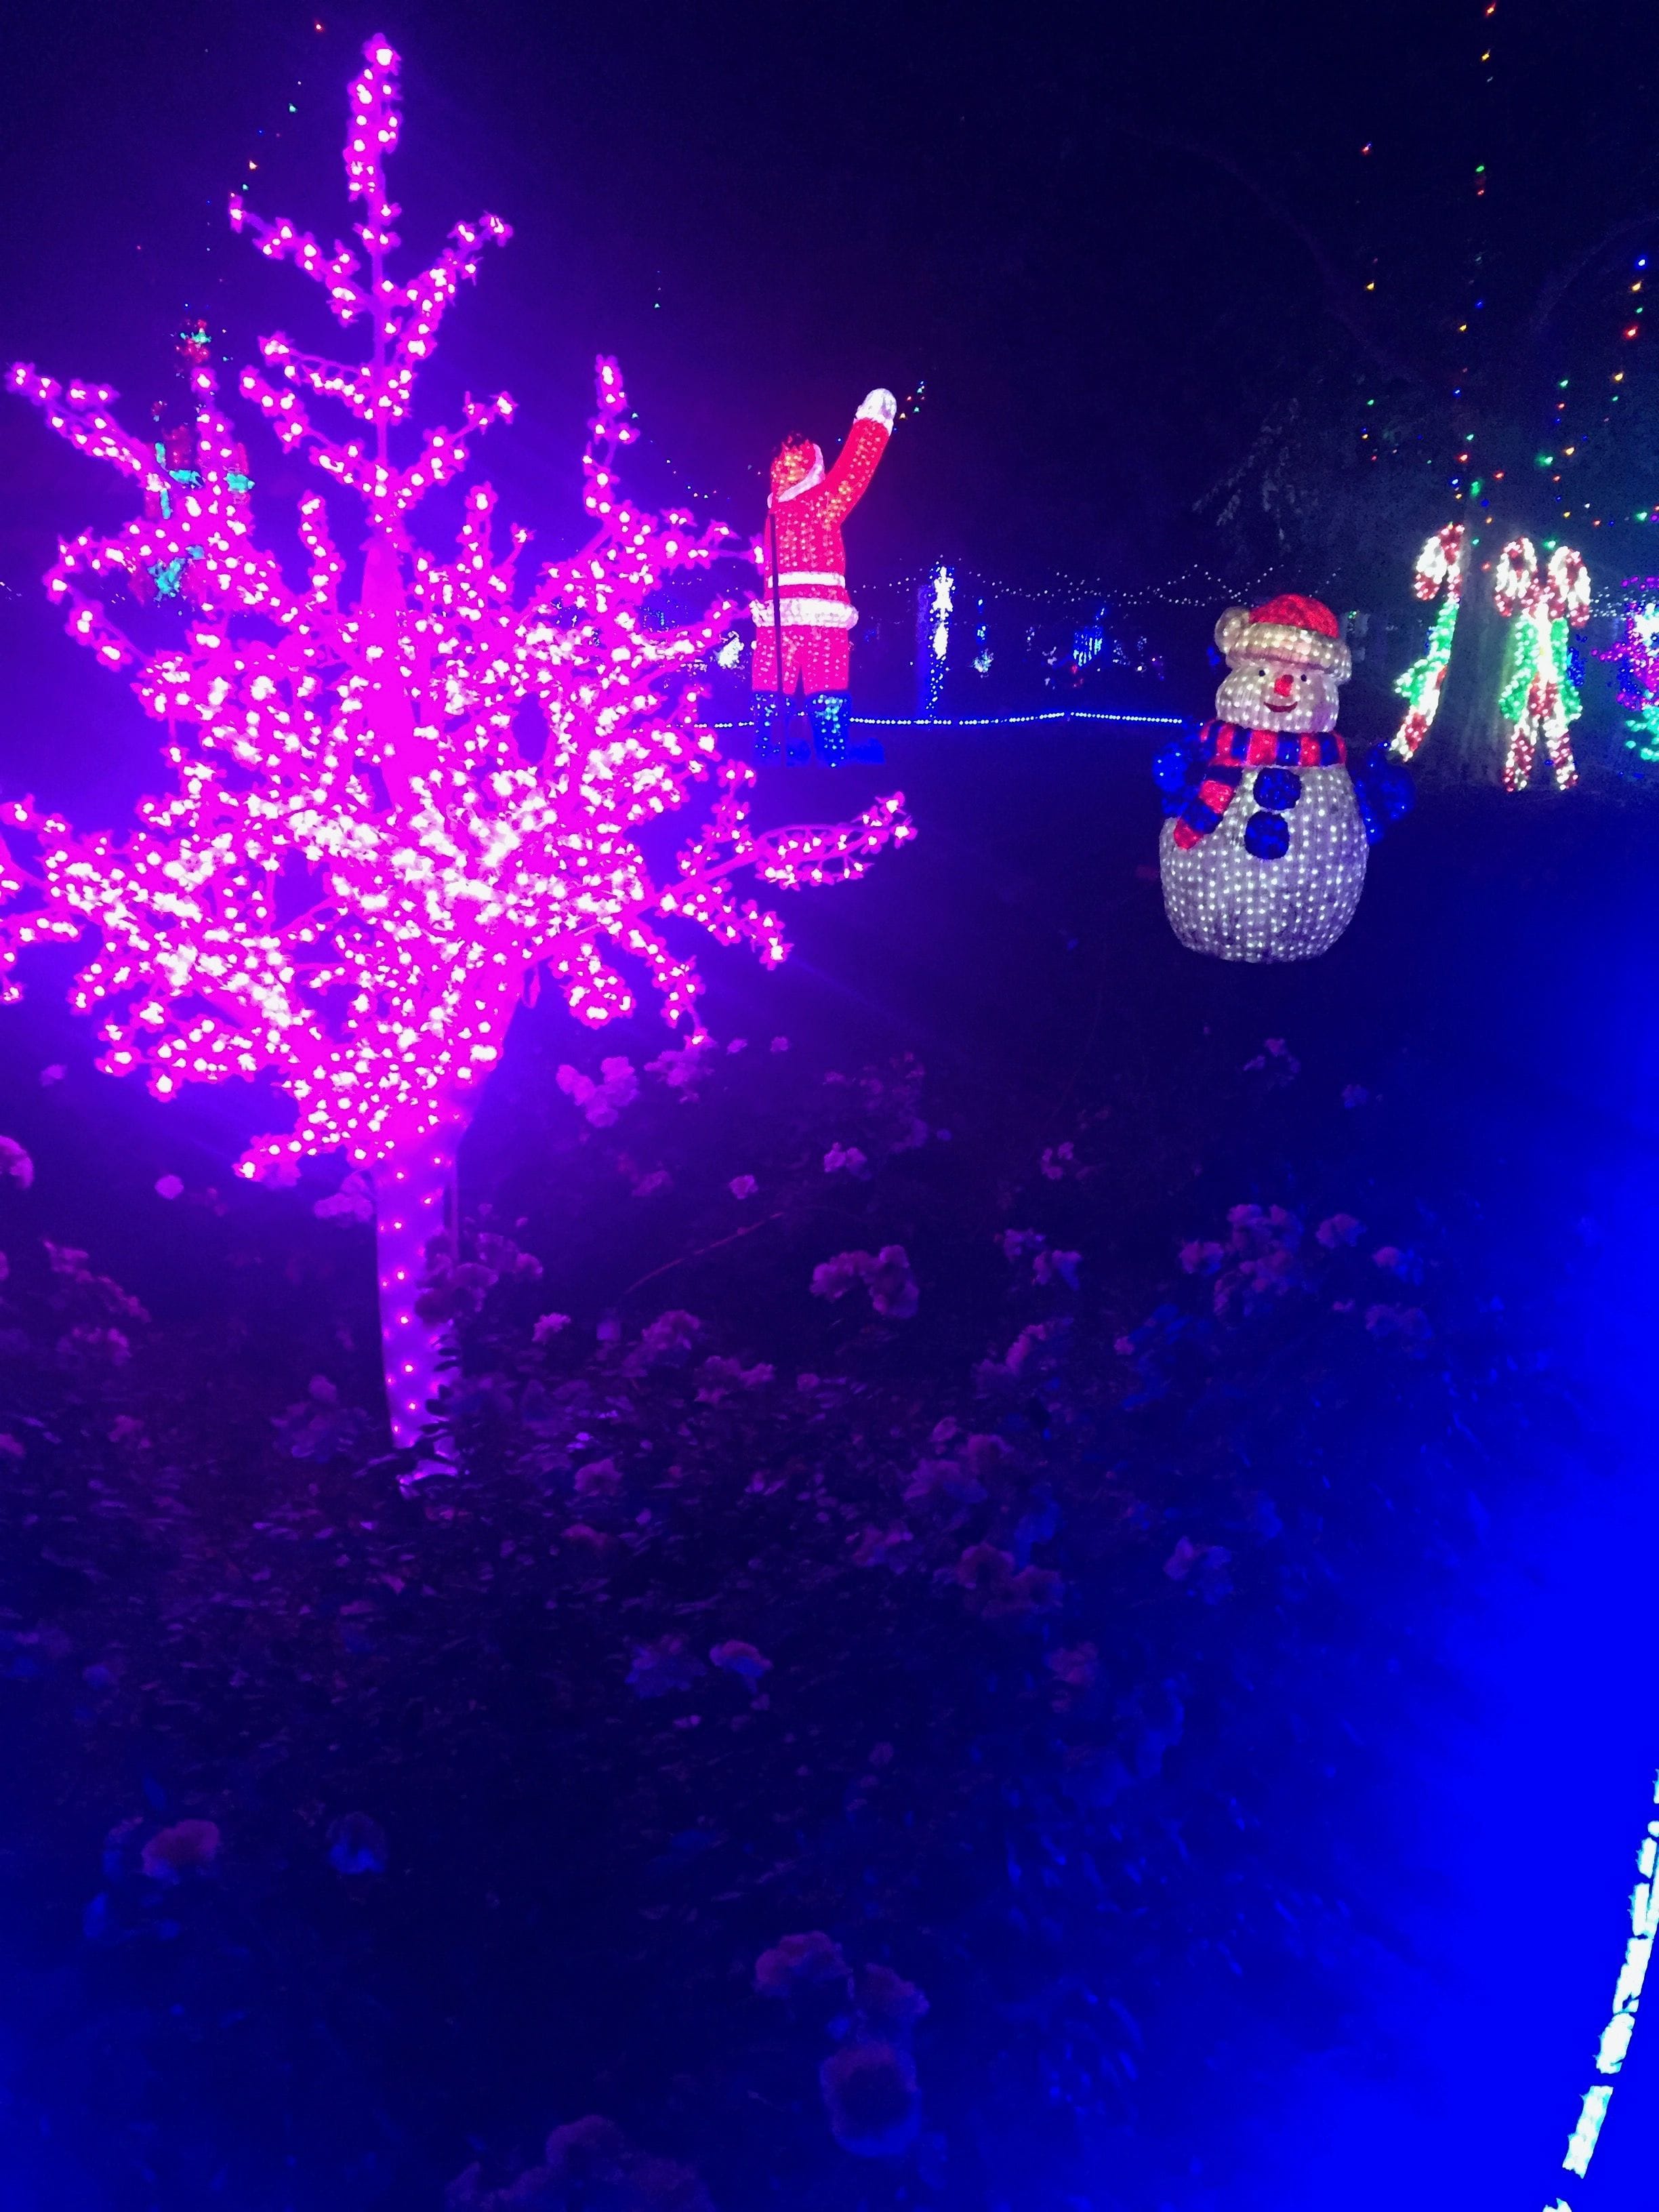 Hunter Valley Christmas Lights Spectacular Image -5b3abbd998b03